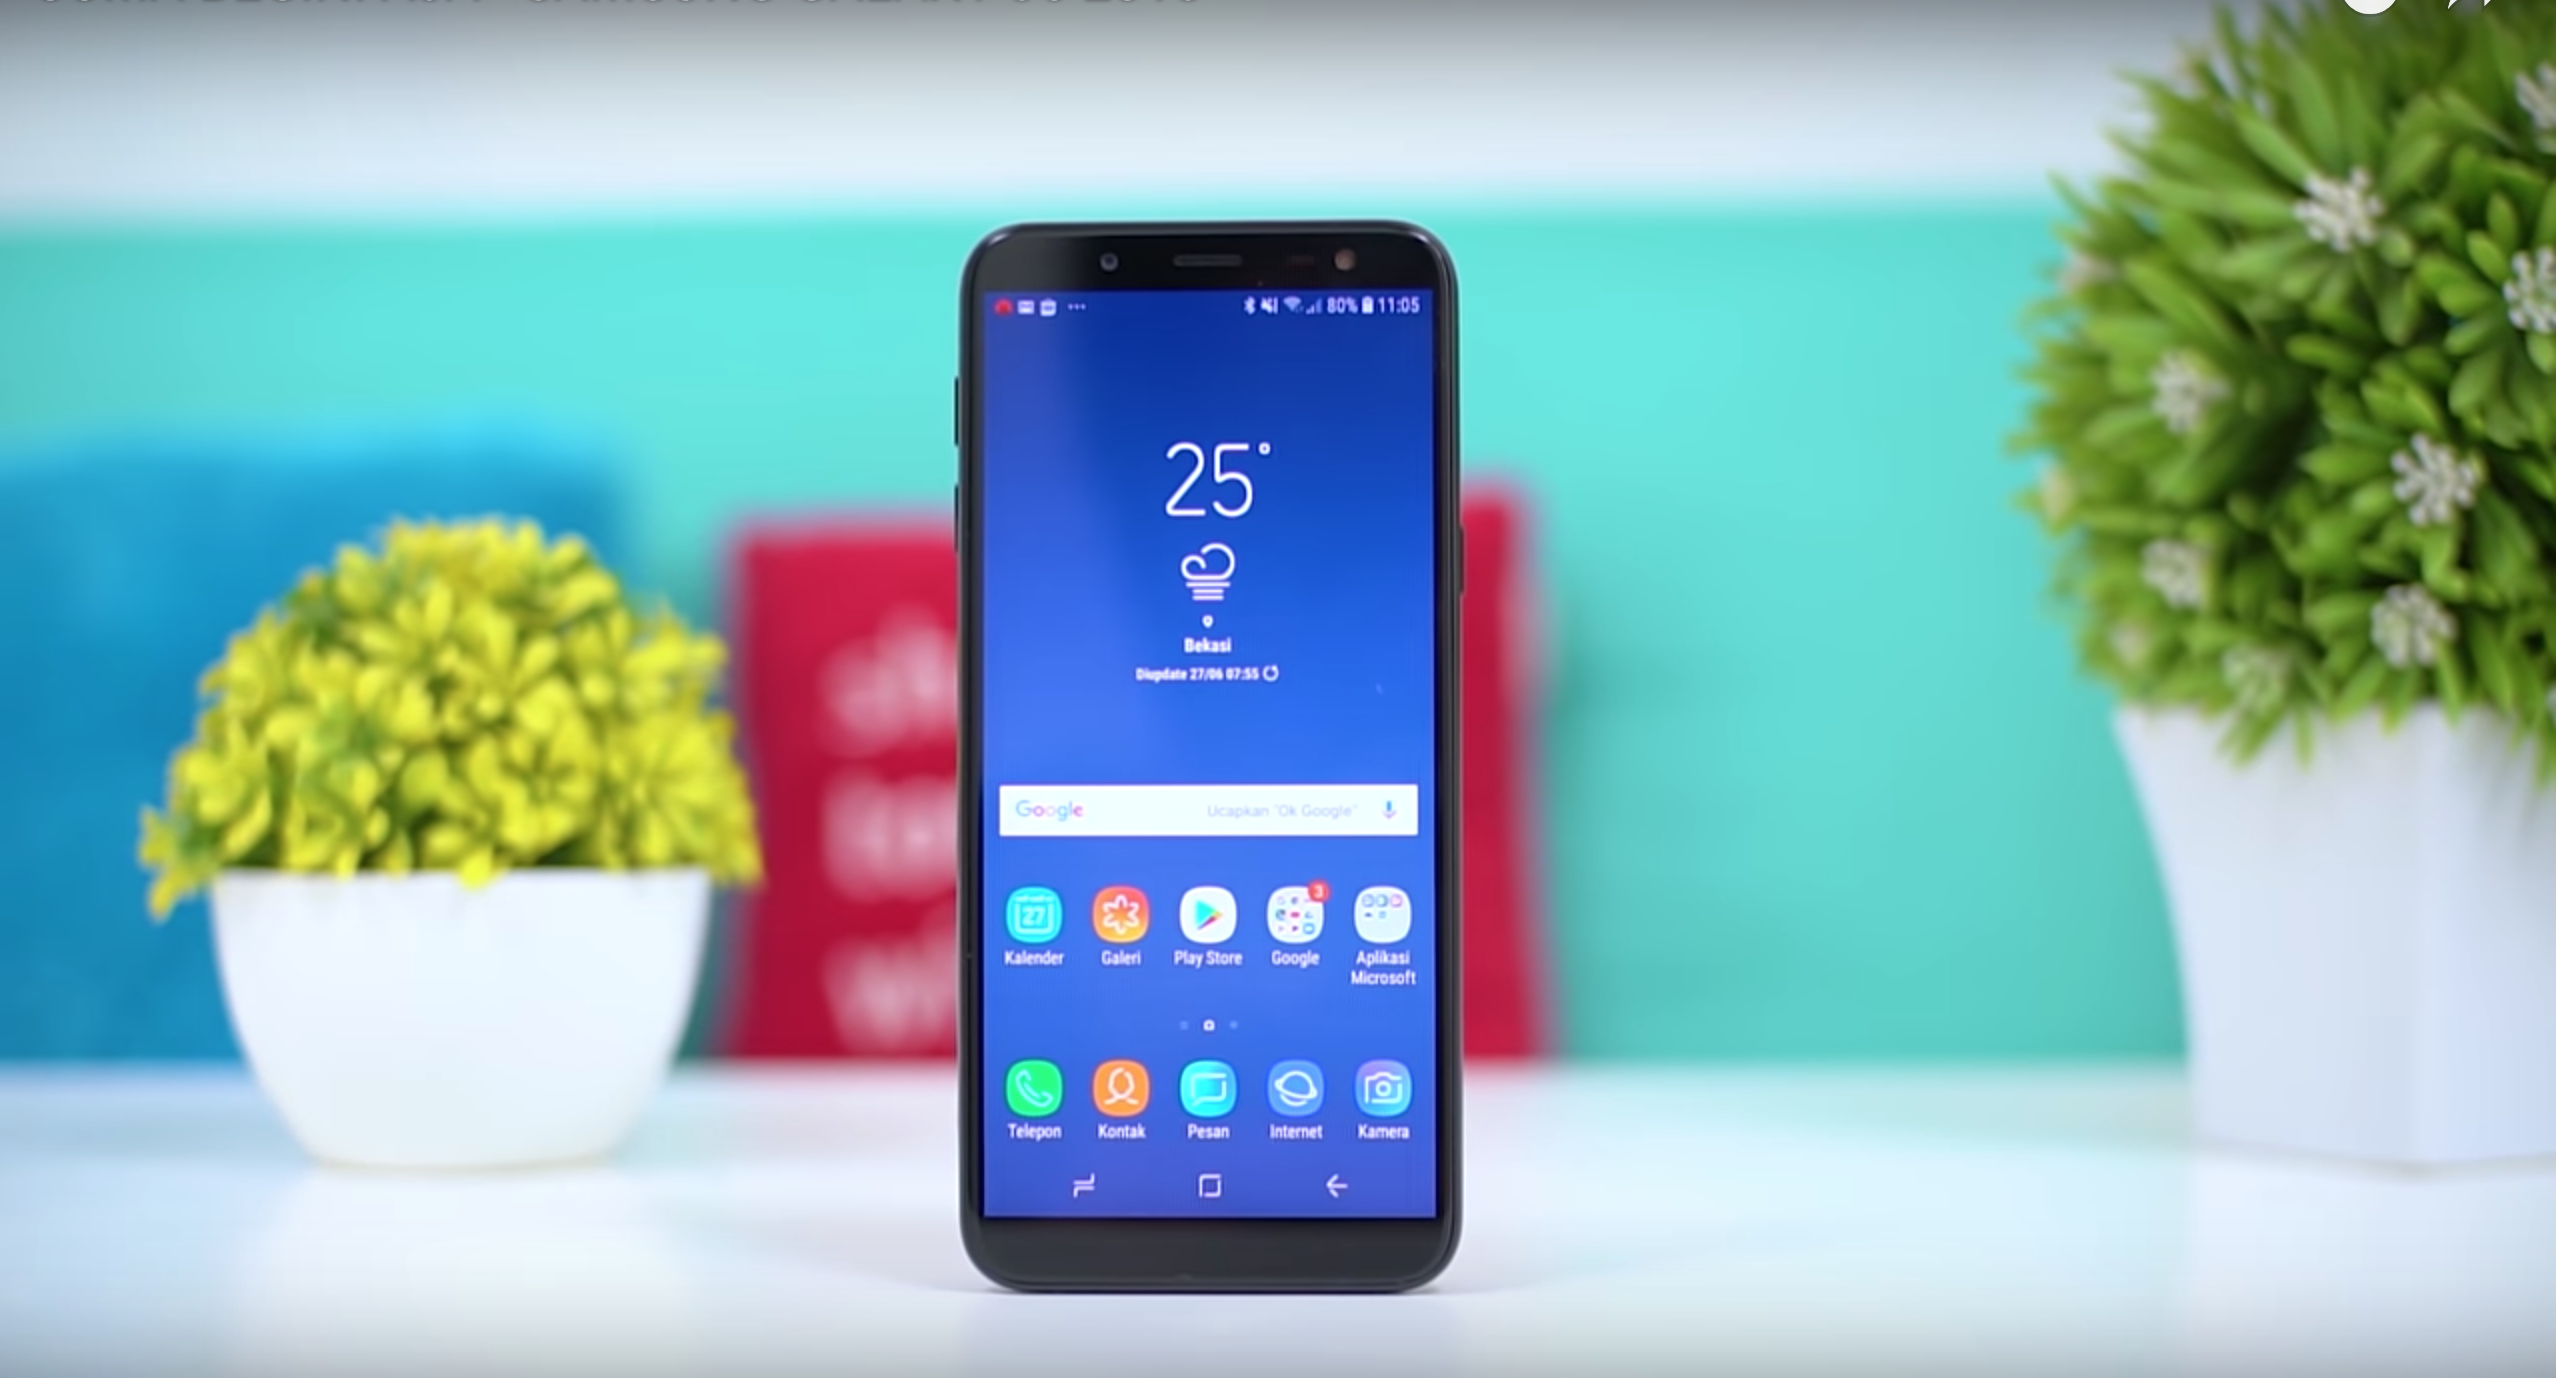 Samsung Galaxy J6 (2018) smartphone - advantages and disadvantages